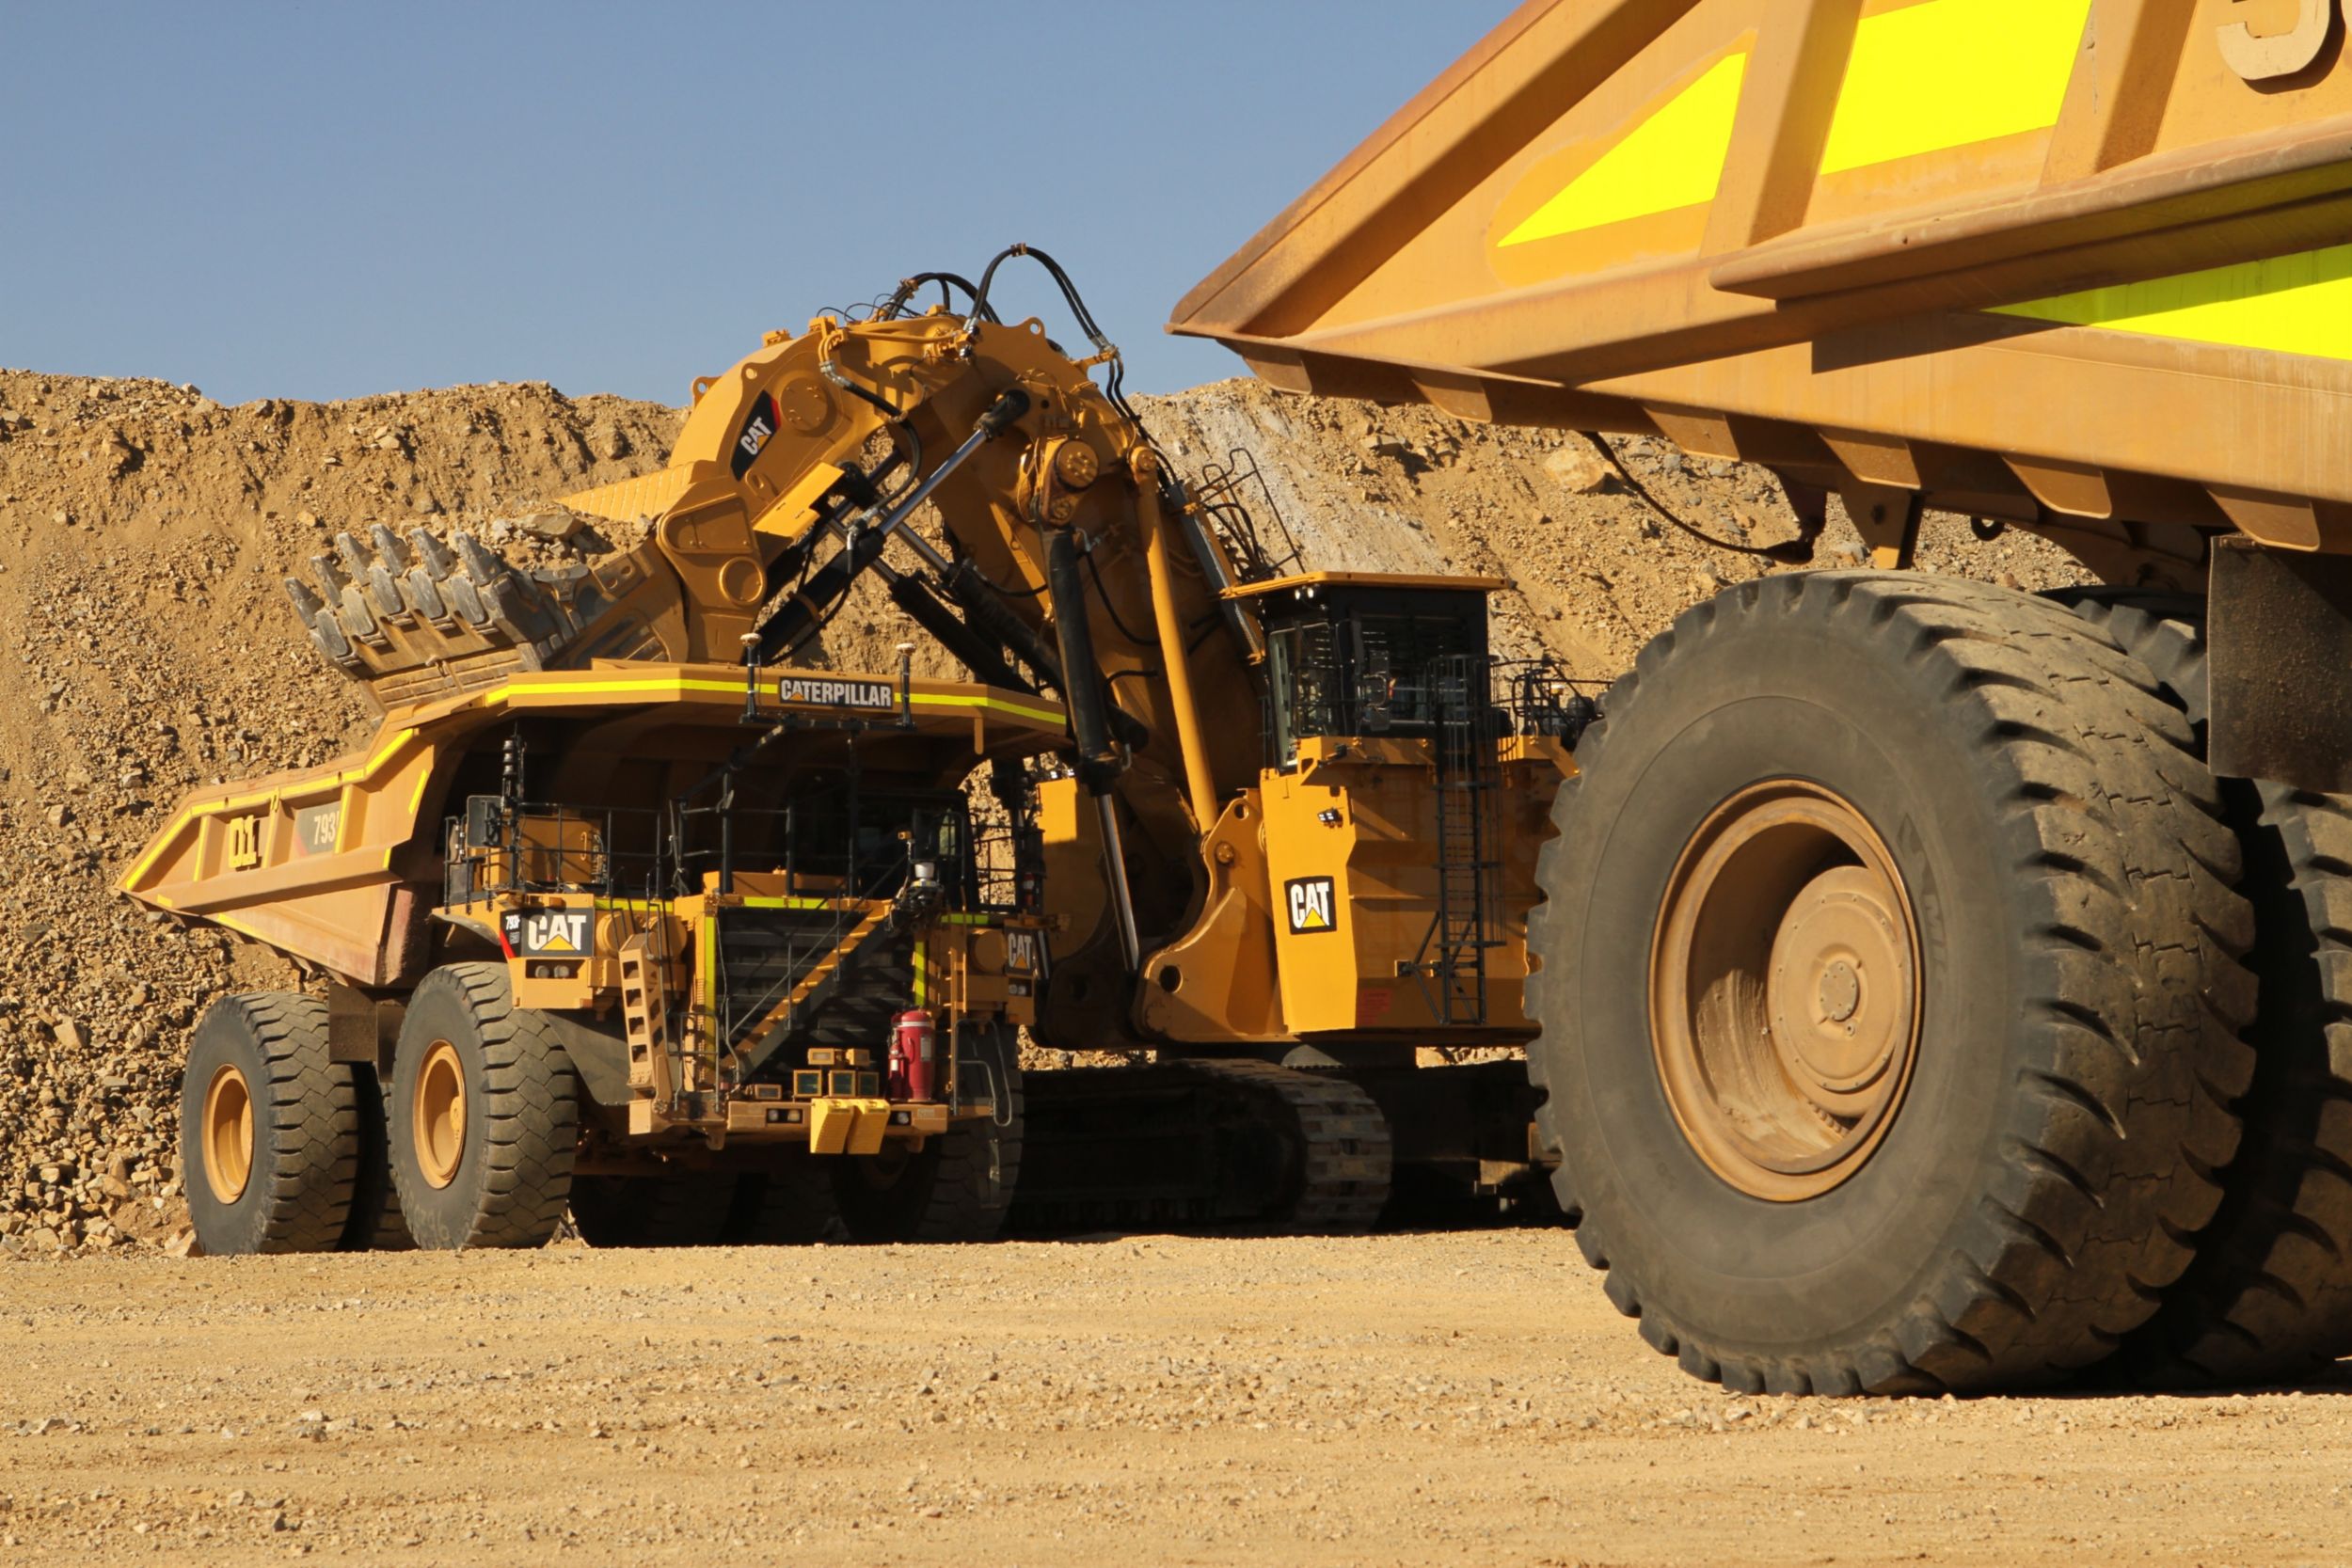 Mining equipment on a job site